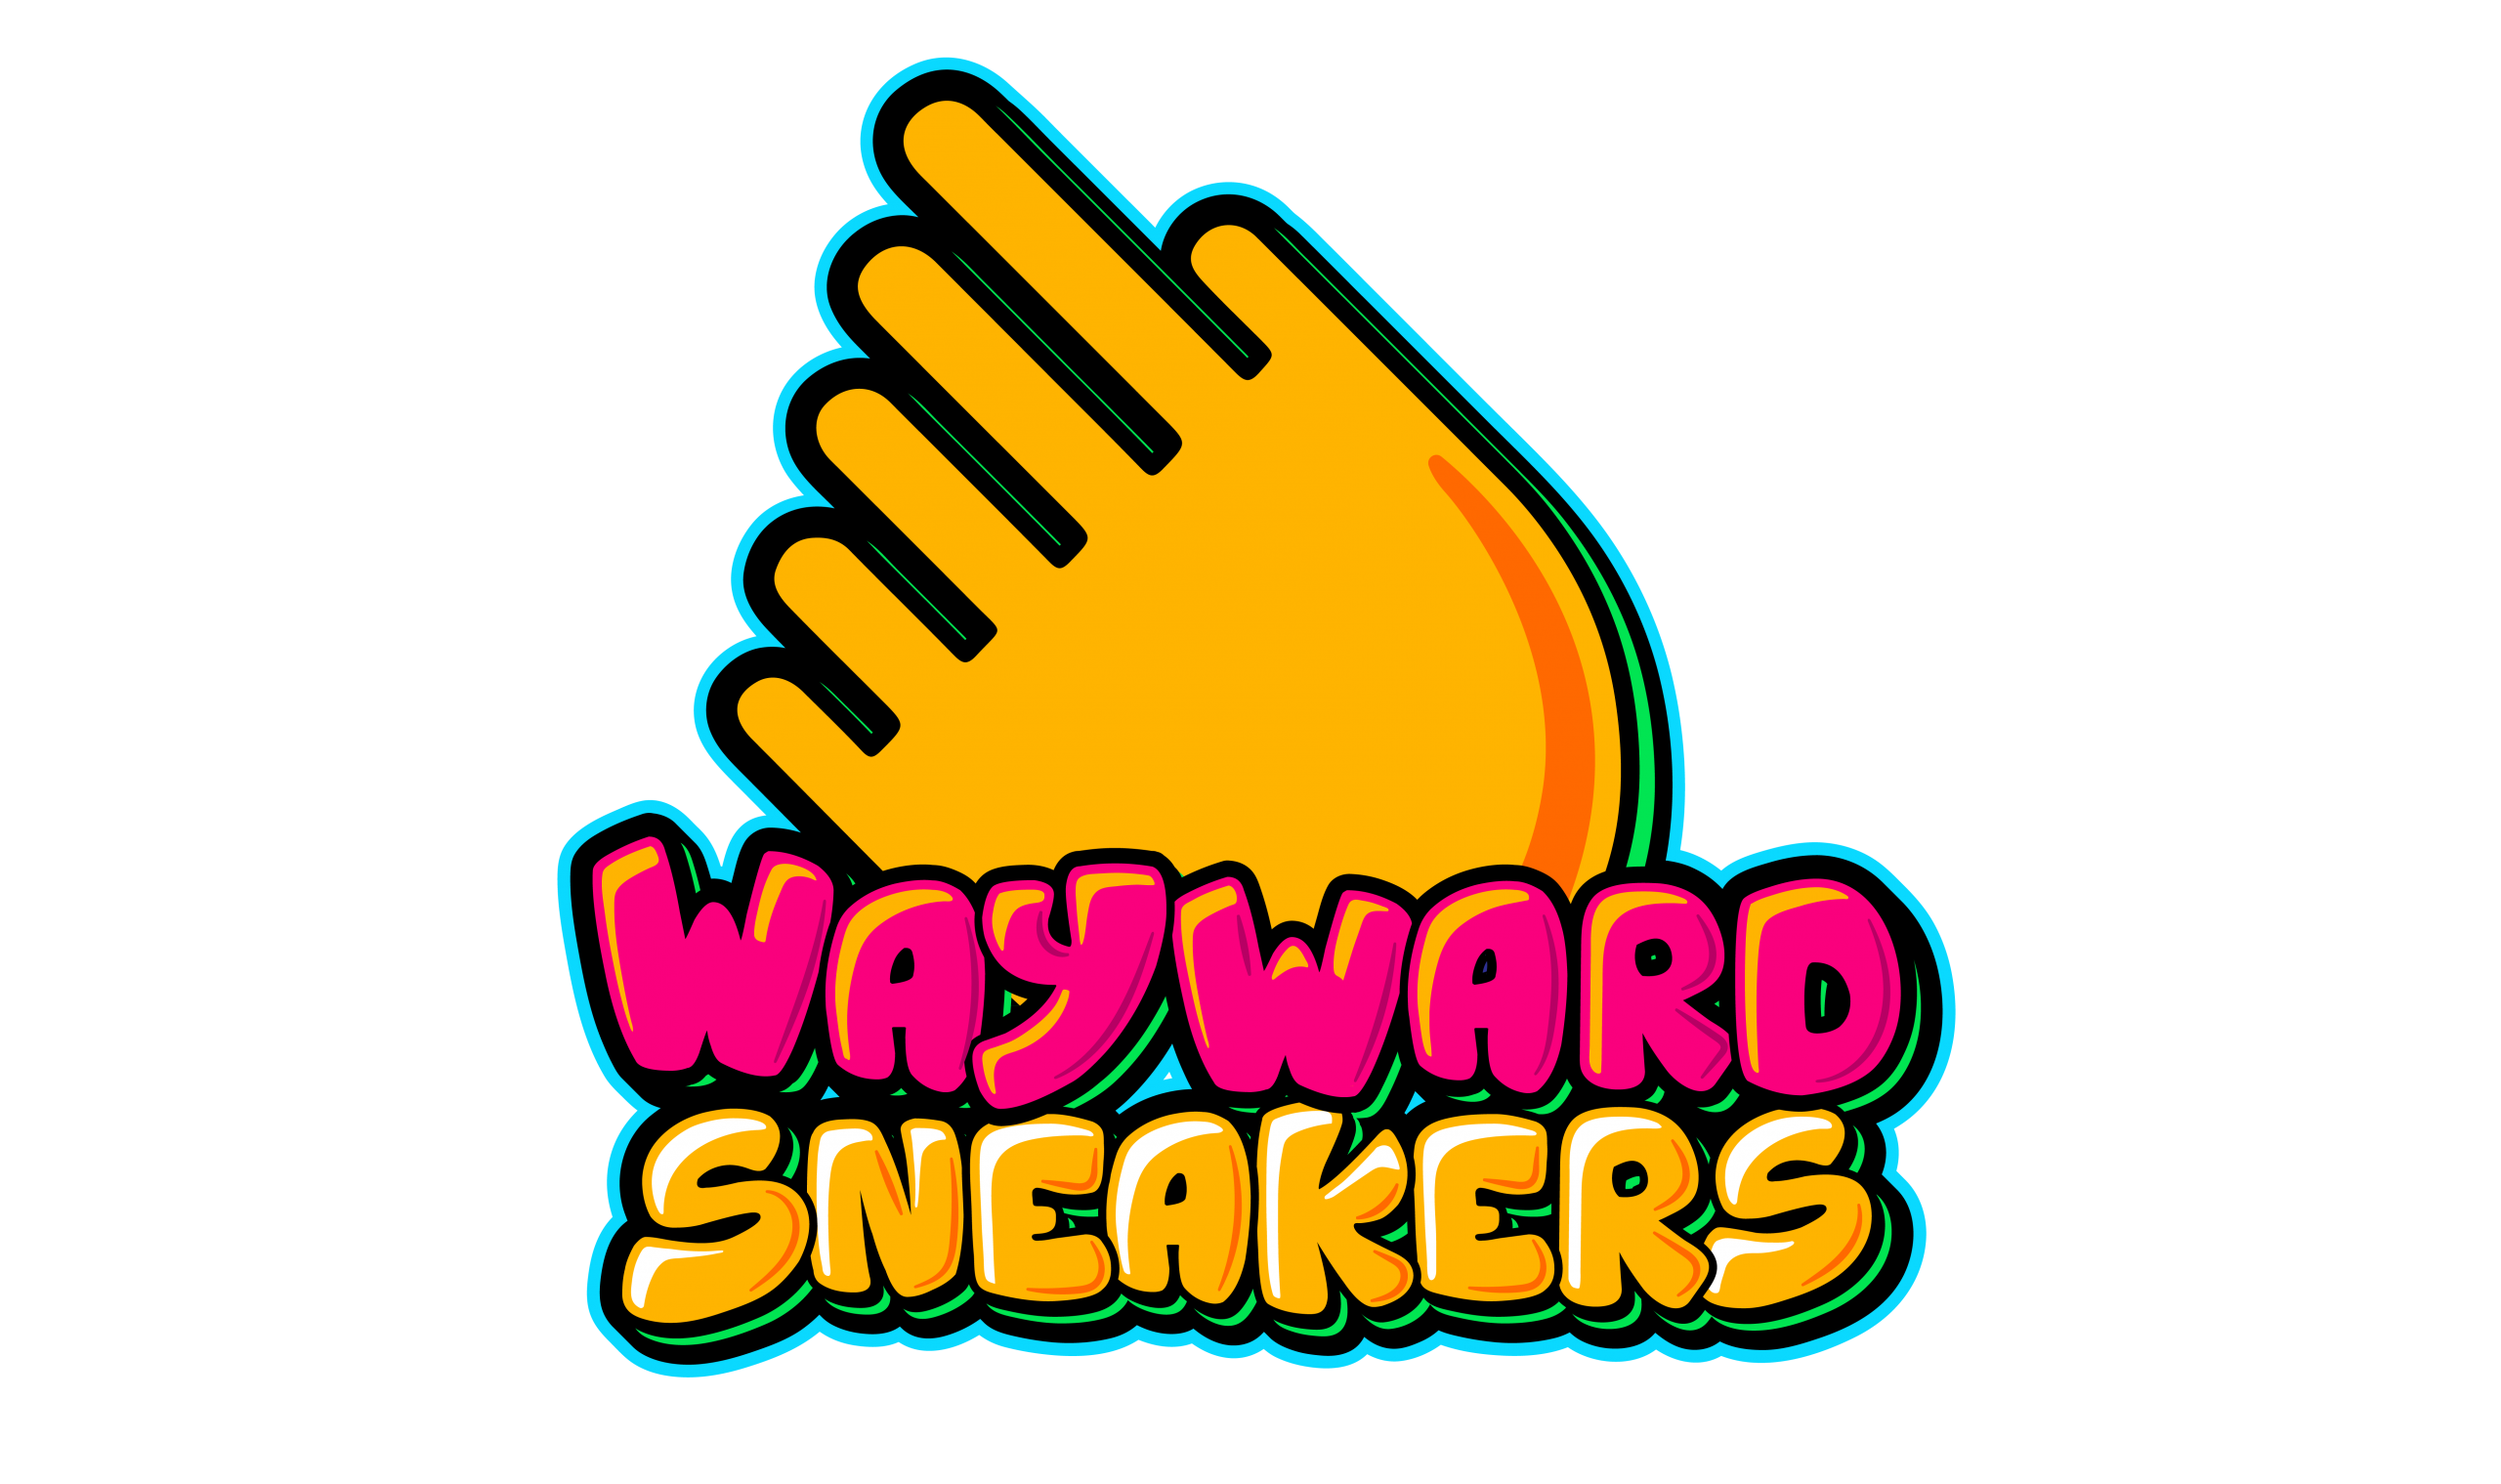 WayWard Sneakers